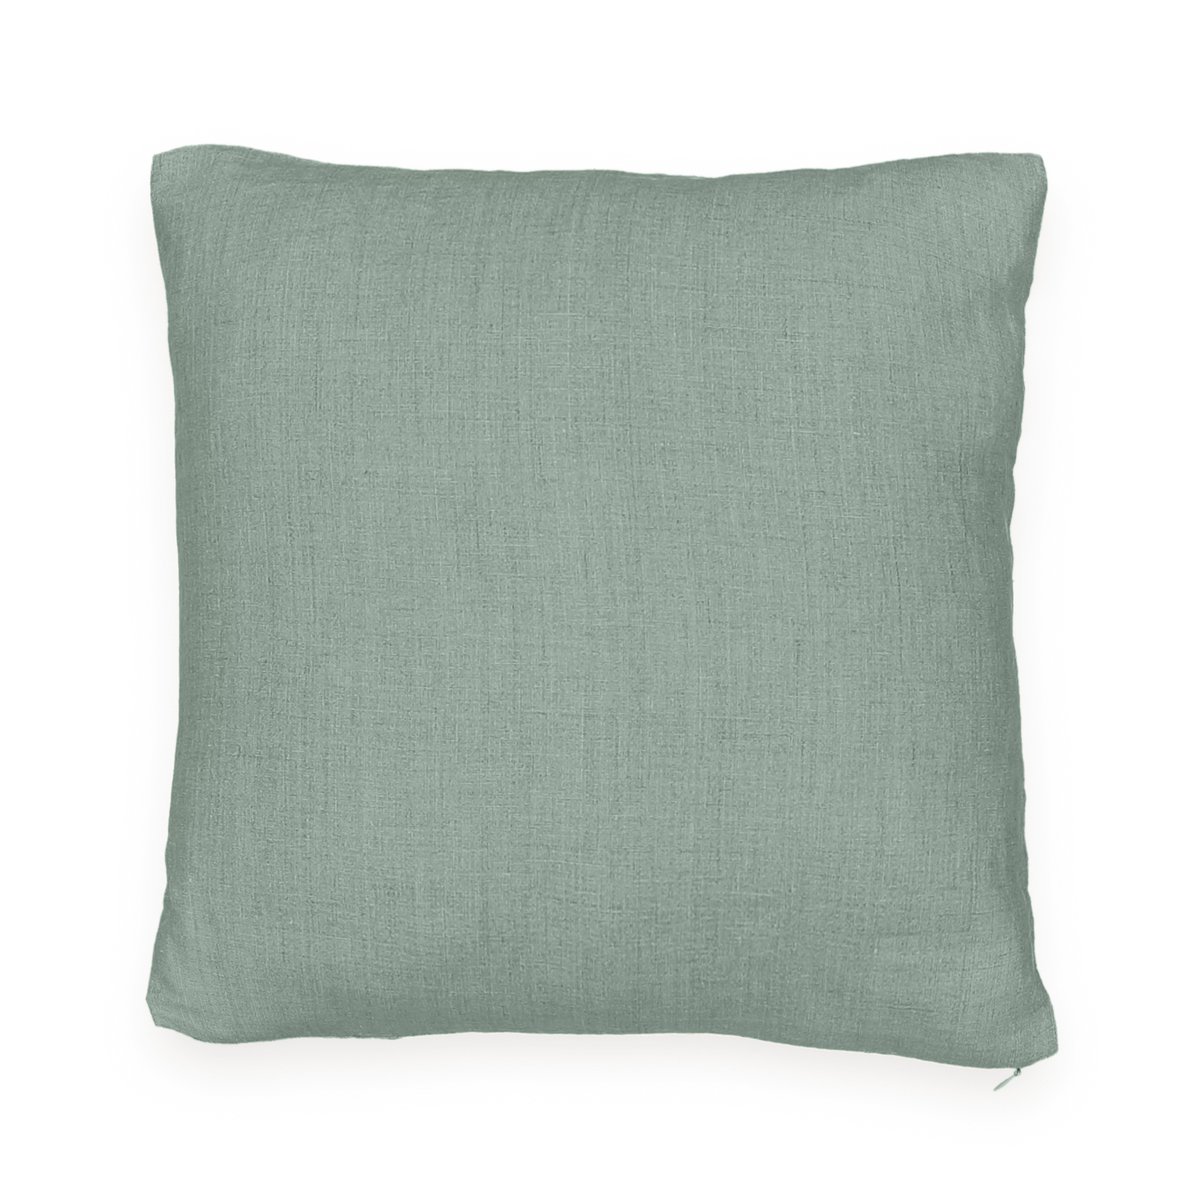 Чехол La Redoute На подушку-валик из стираного льна ONEGA 50 x 30 см зеленый, размер 50 x 30 см - фото 1